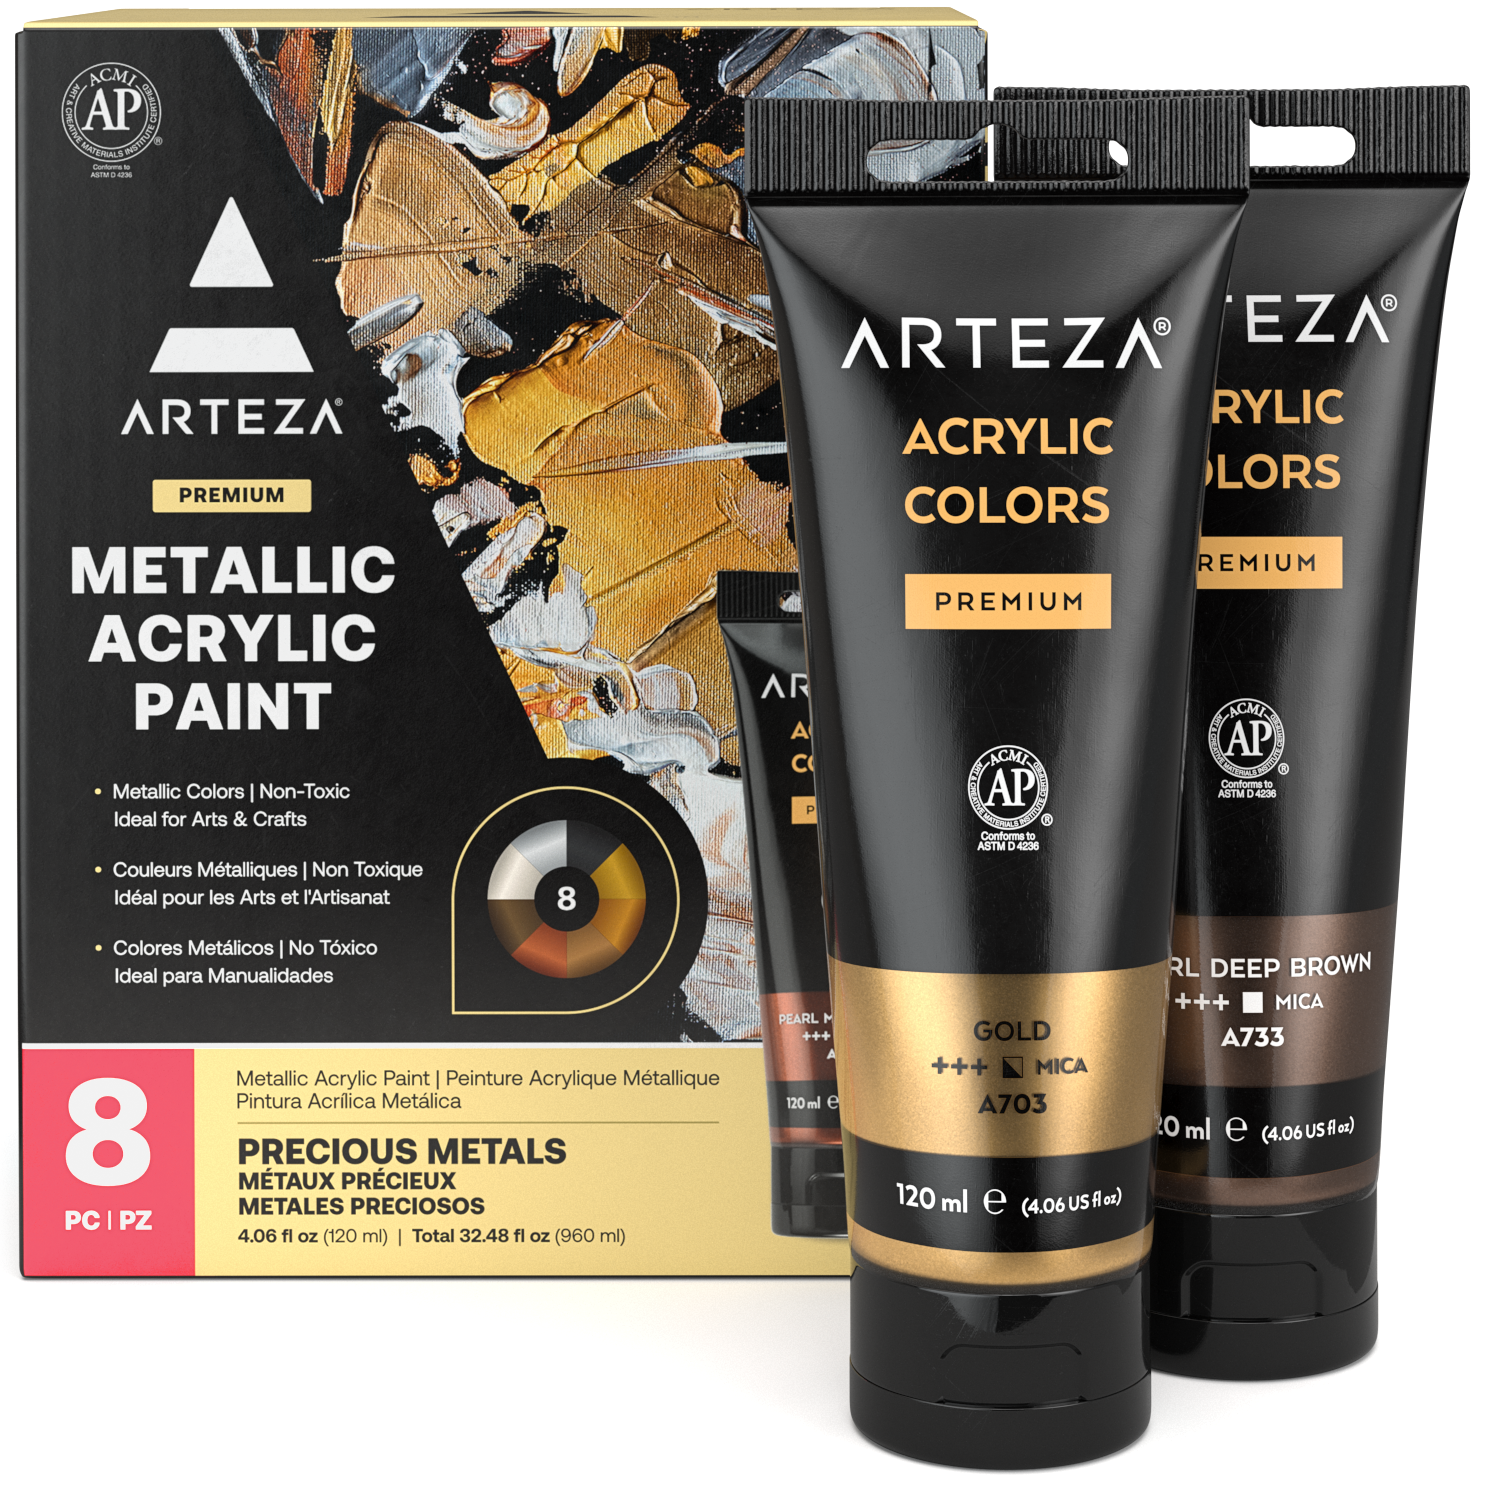  ARTEZA Metallic Acrylic Paint Set of 36 Colors with